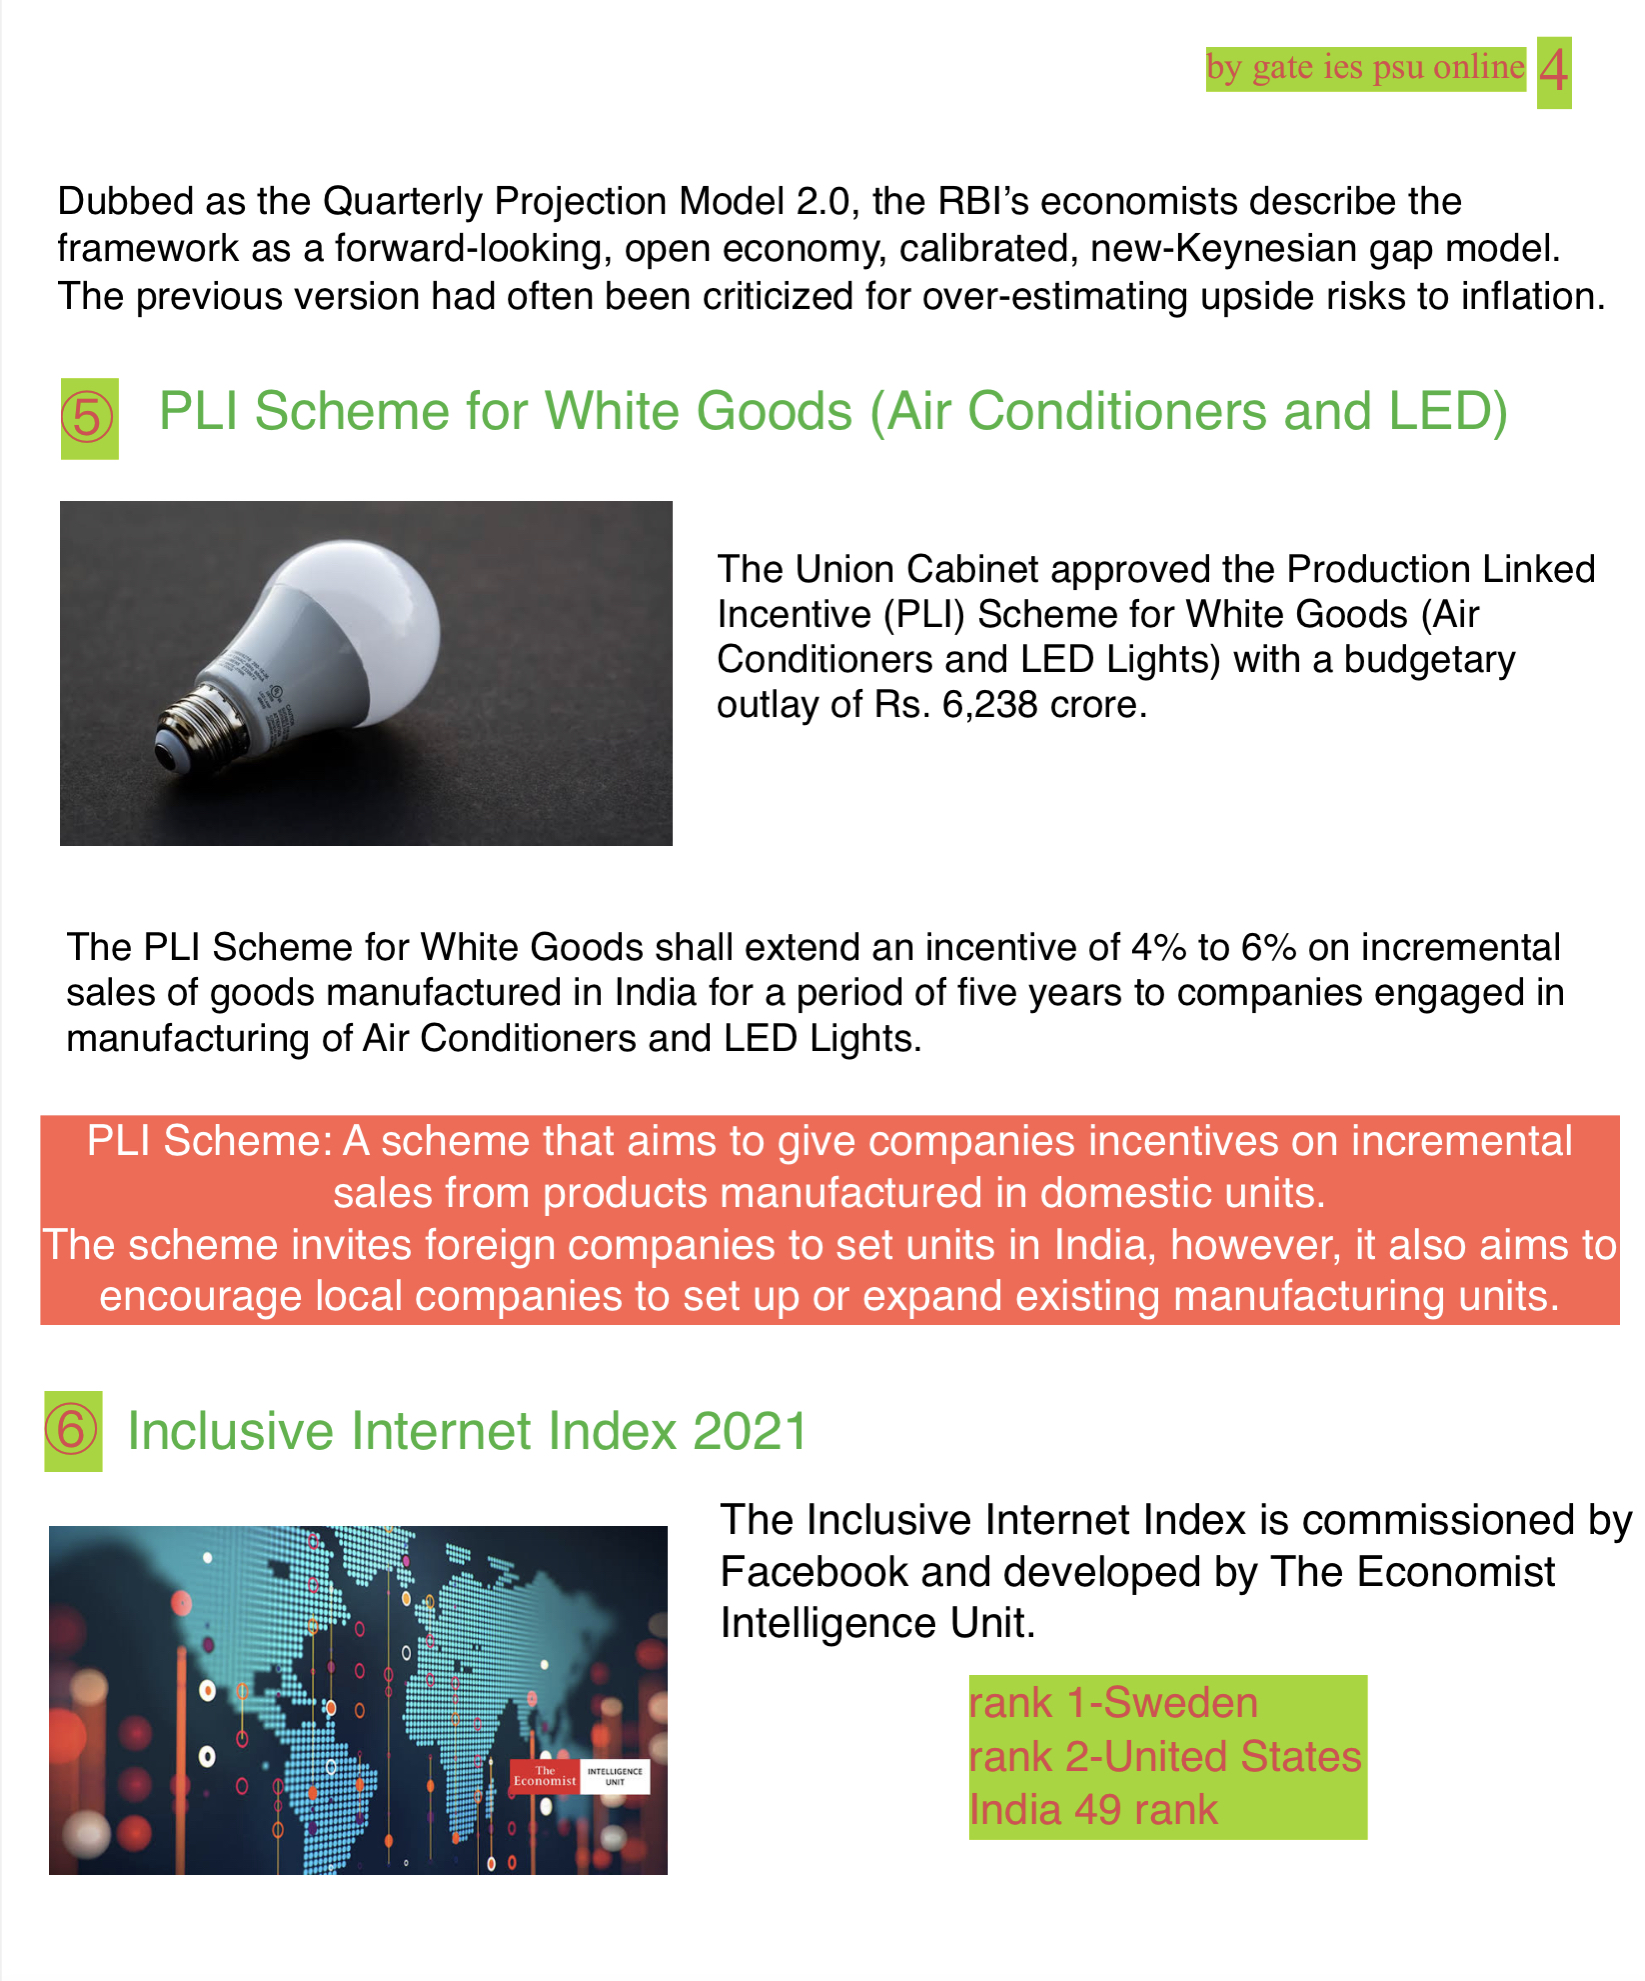 pli scheme for white goods, inclusive internet index 2021 upsc current affairs 